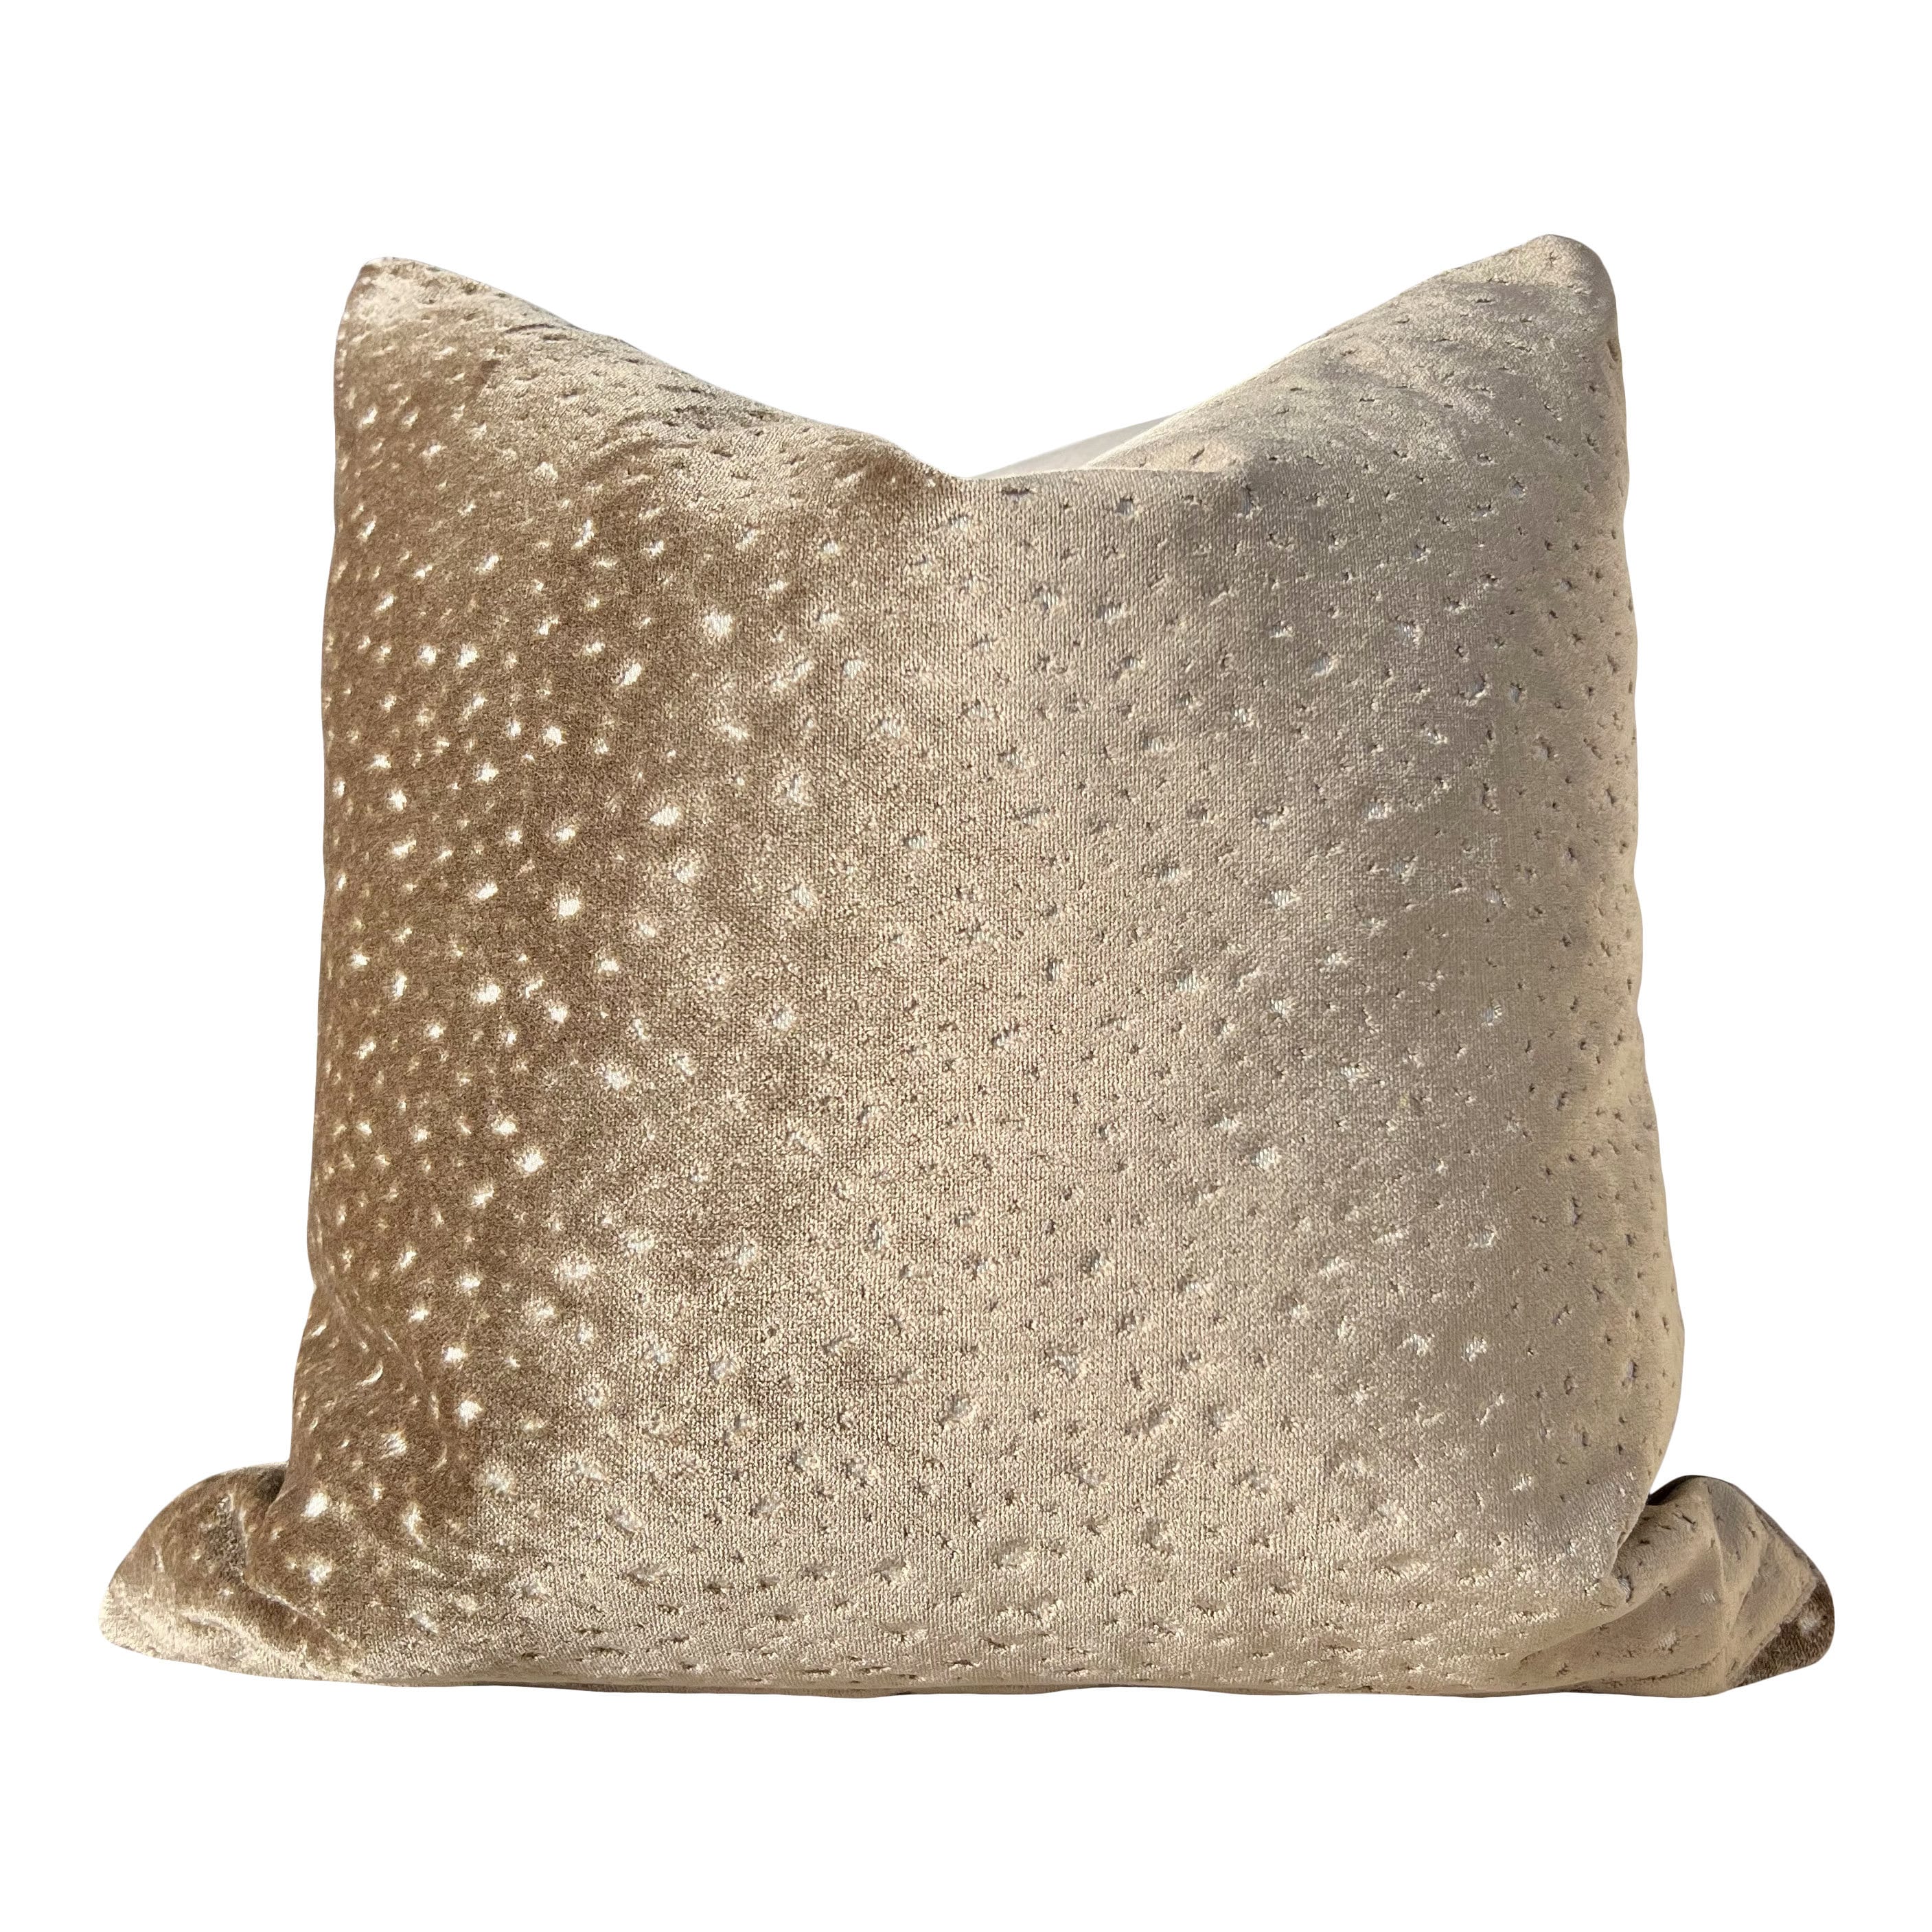 Designer Beige Spotted Velvet Pillow. Accent Lumbar Animal Skin Pillow Fawn Designer Velvet Long Lumbar Pillow Decorative Toss Throw Pillow